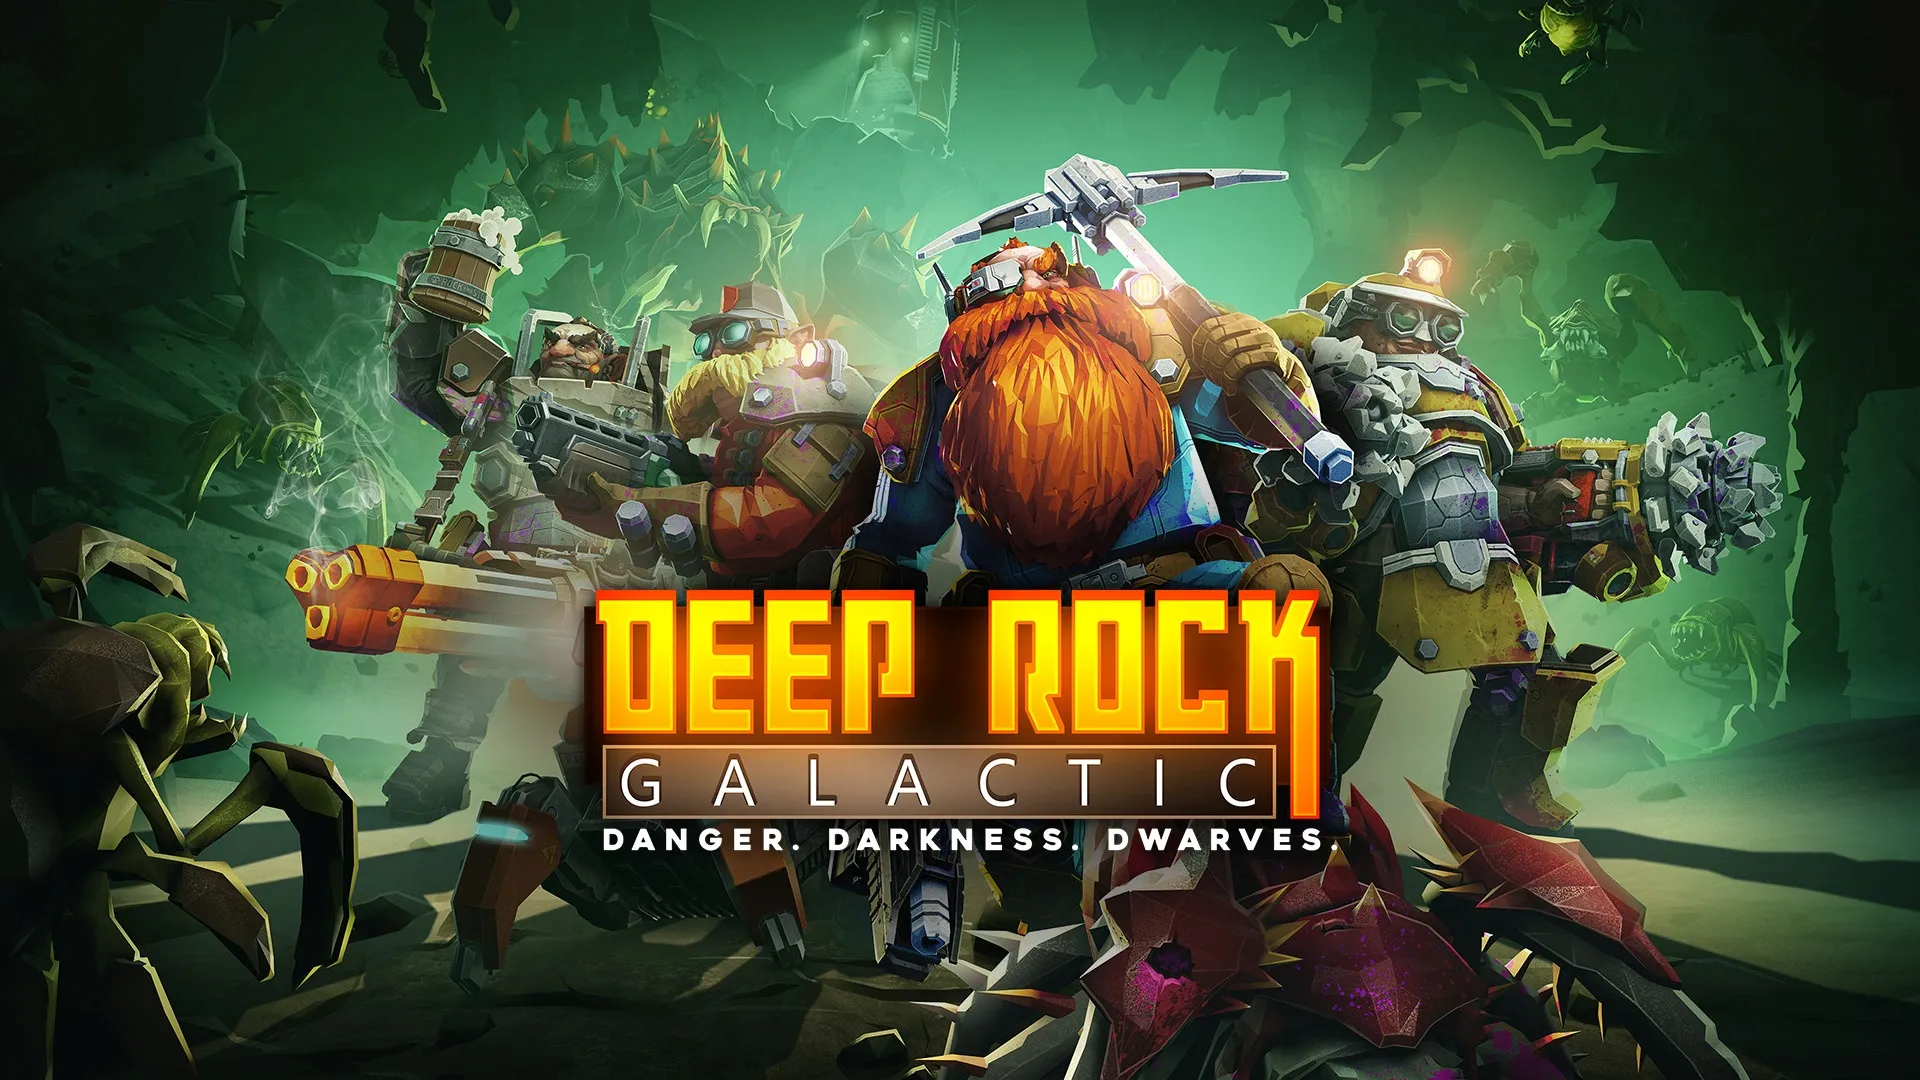 Deep Rock Galactic rog ally game settings